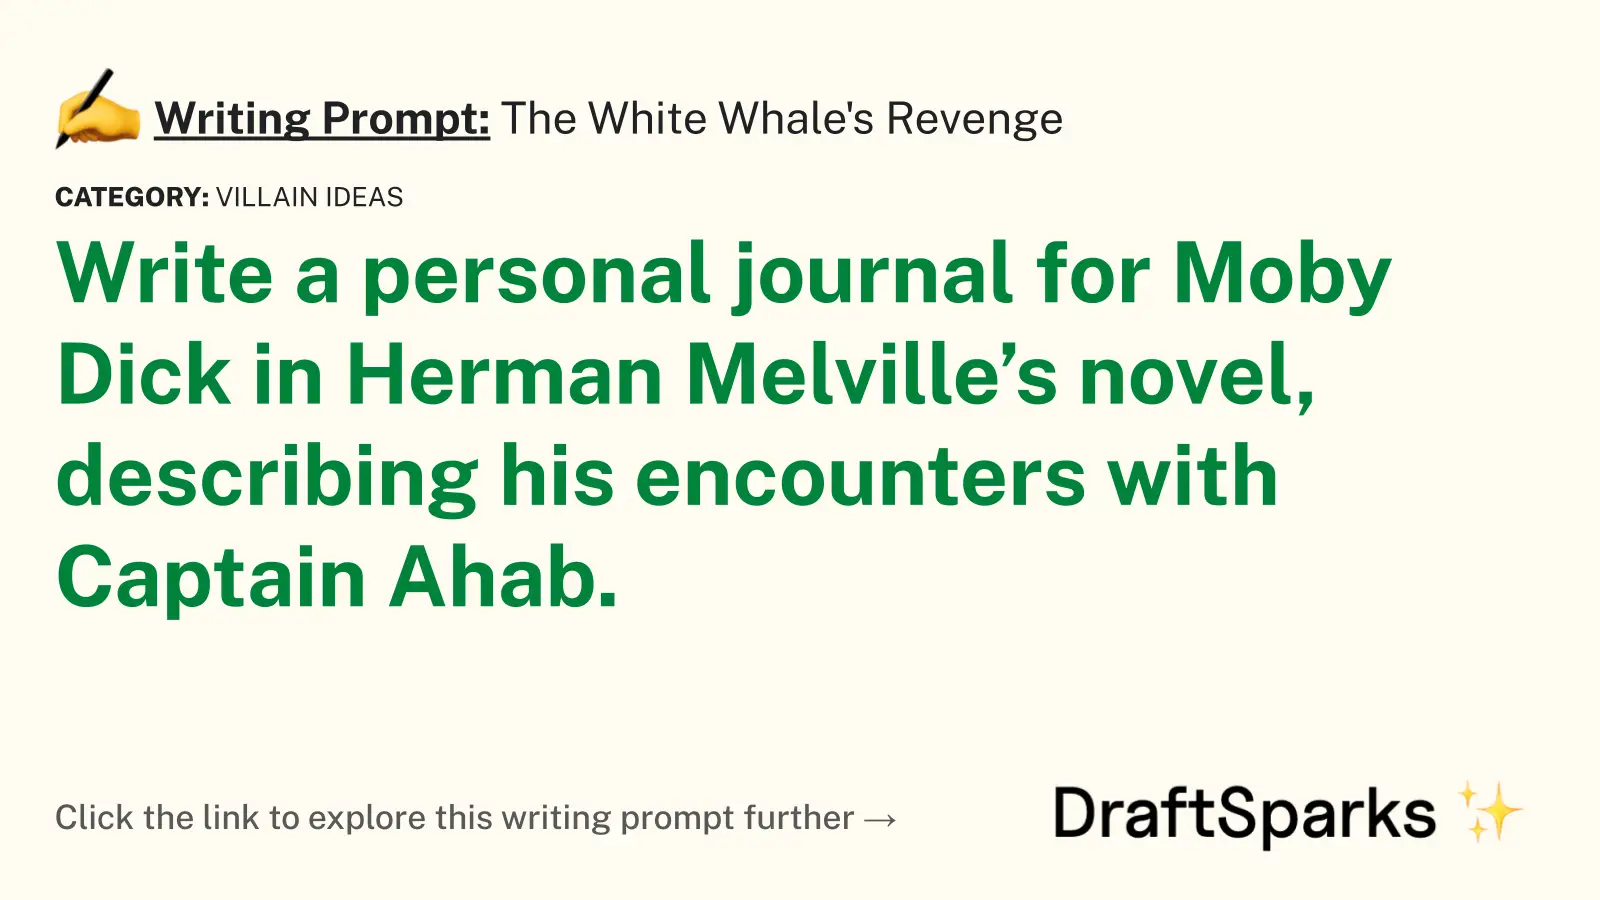 The White Whale’s Revenge